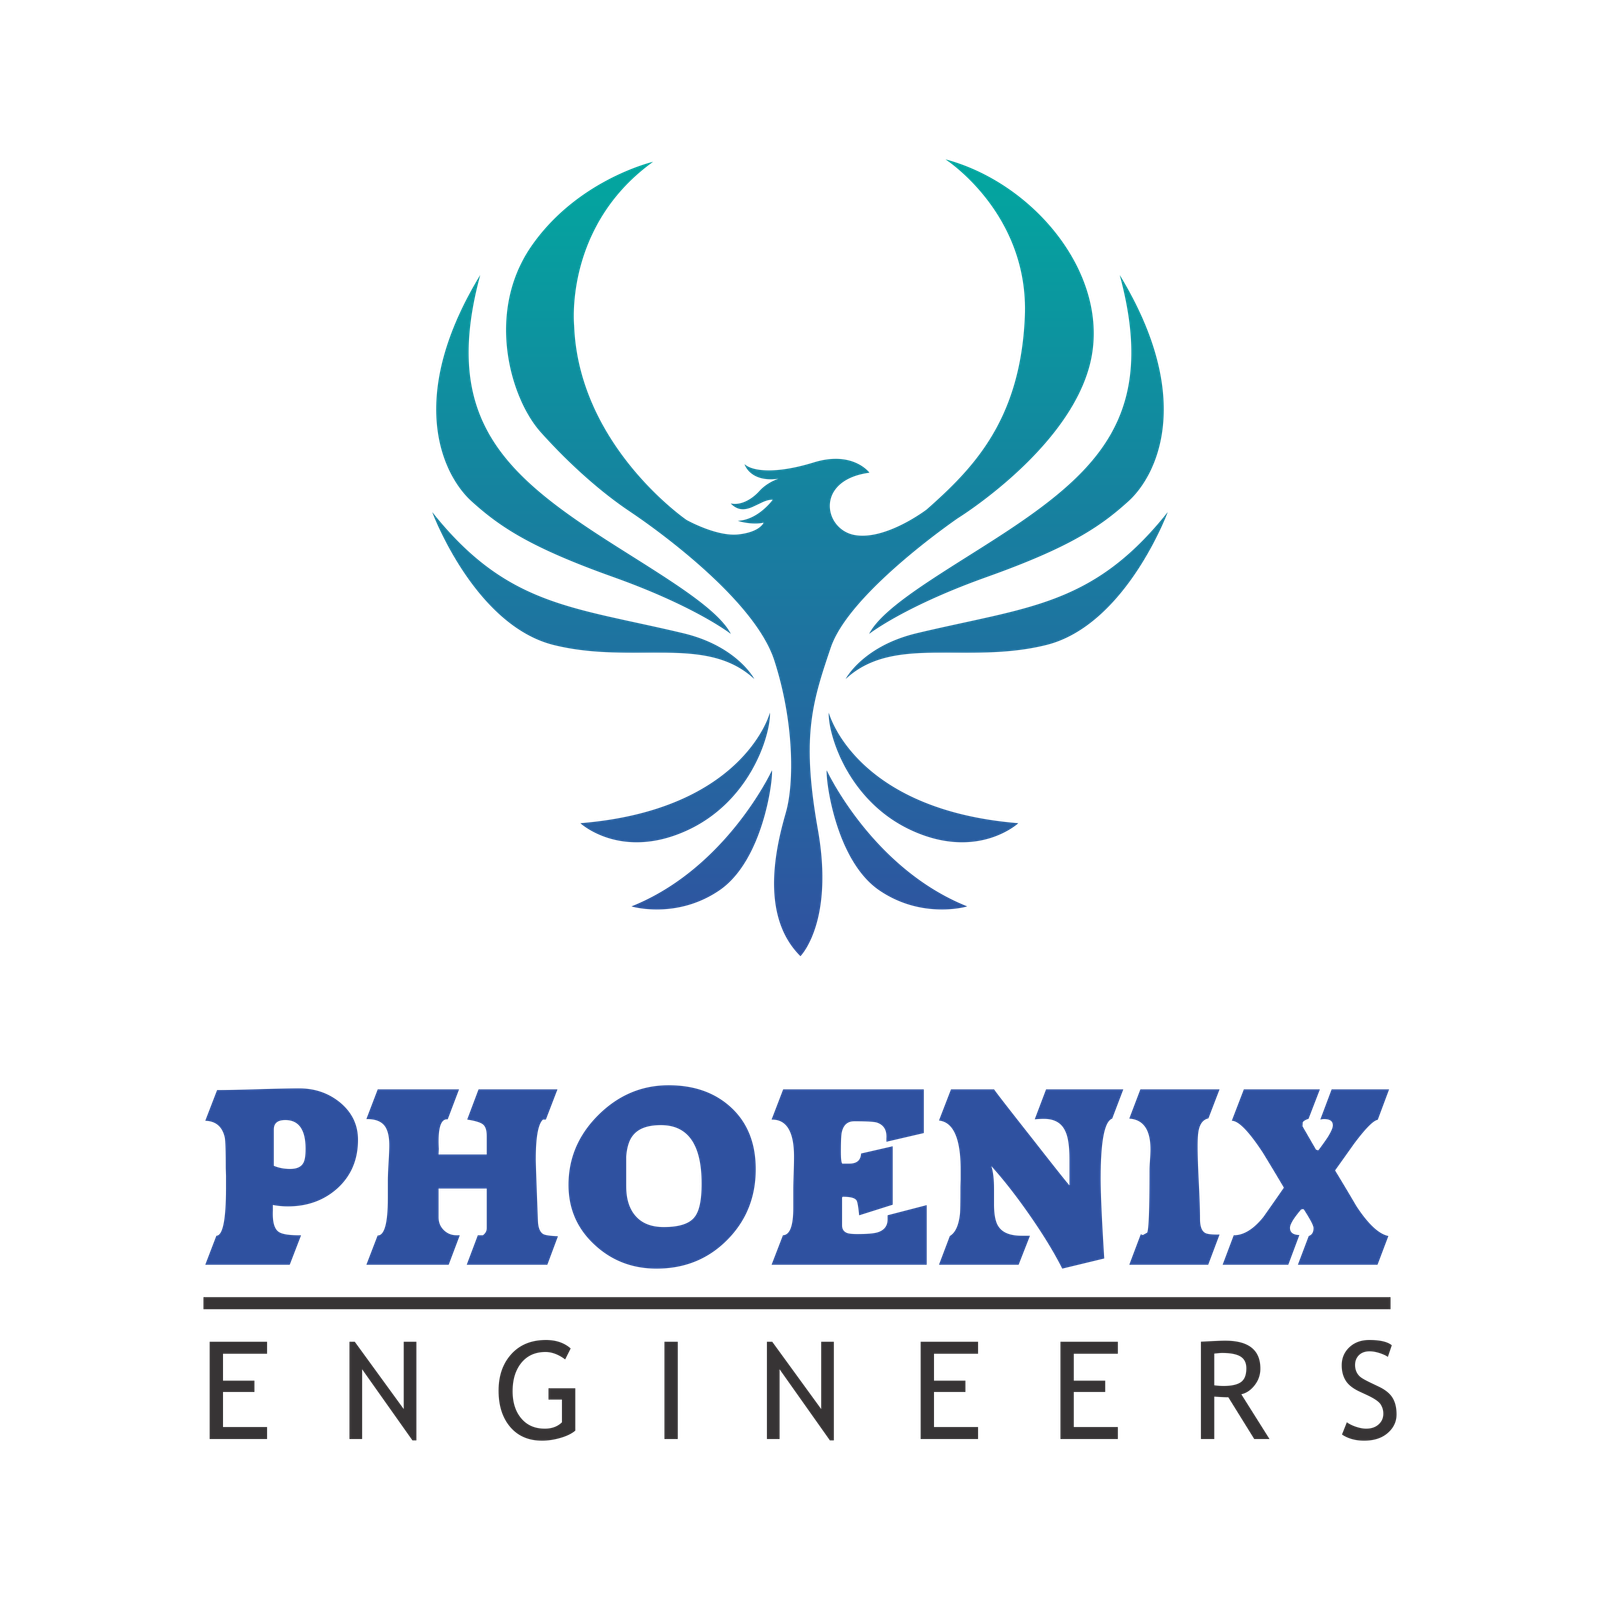 Phoenix Engineers